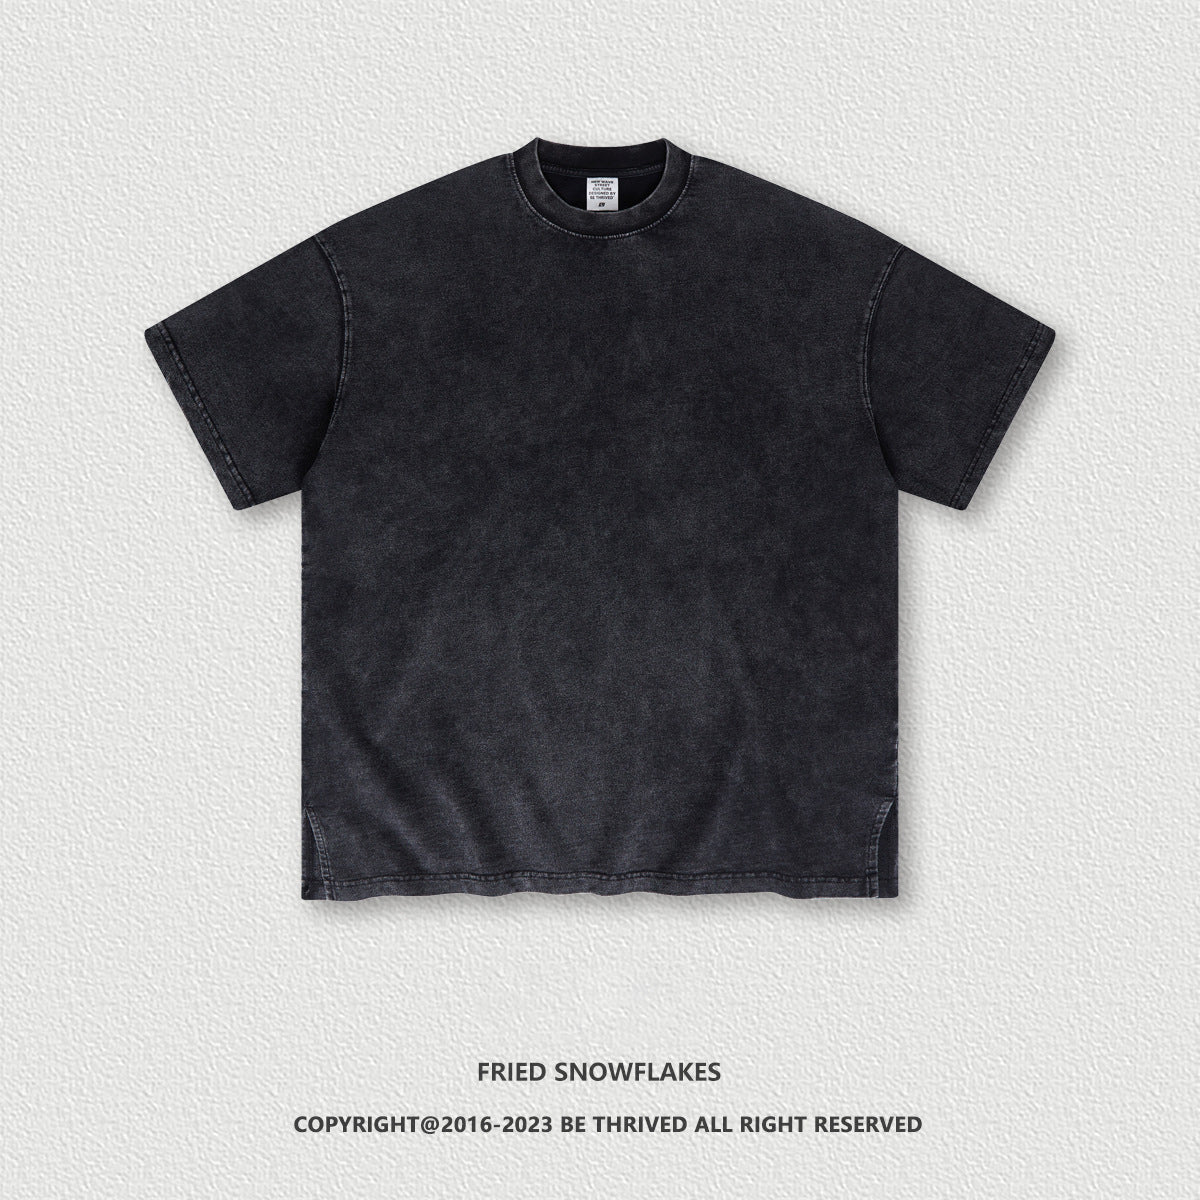 Acid wash 260gsm t shirt -1131